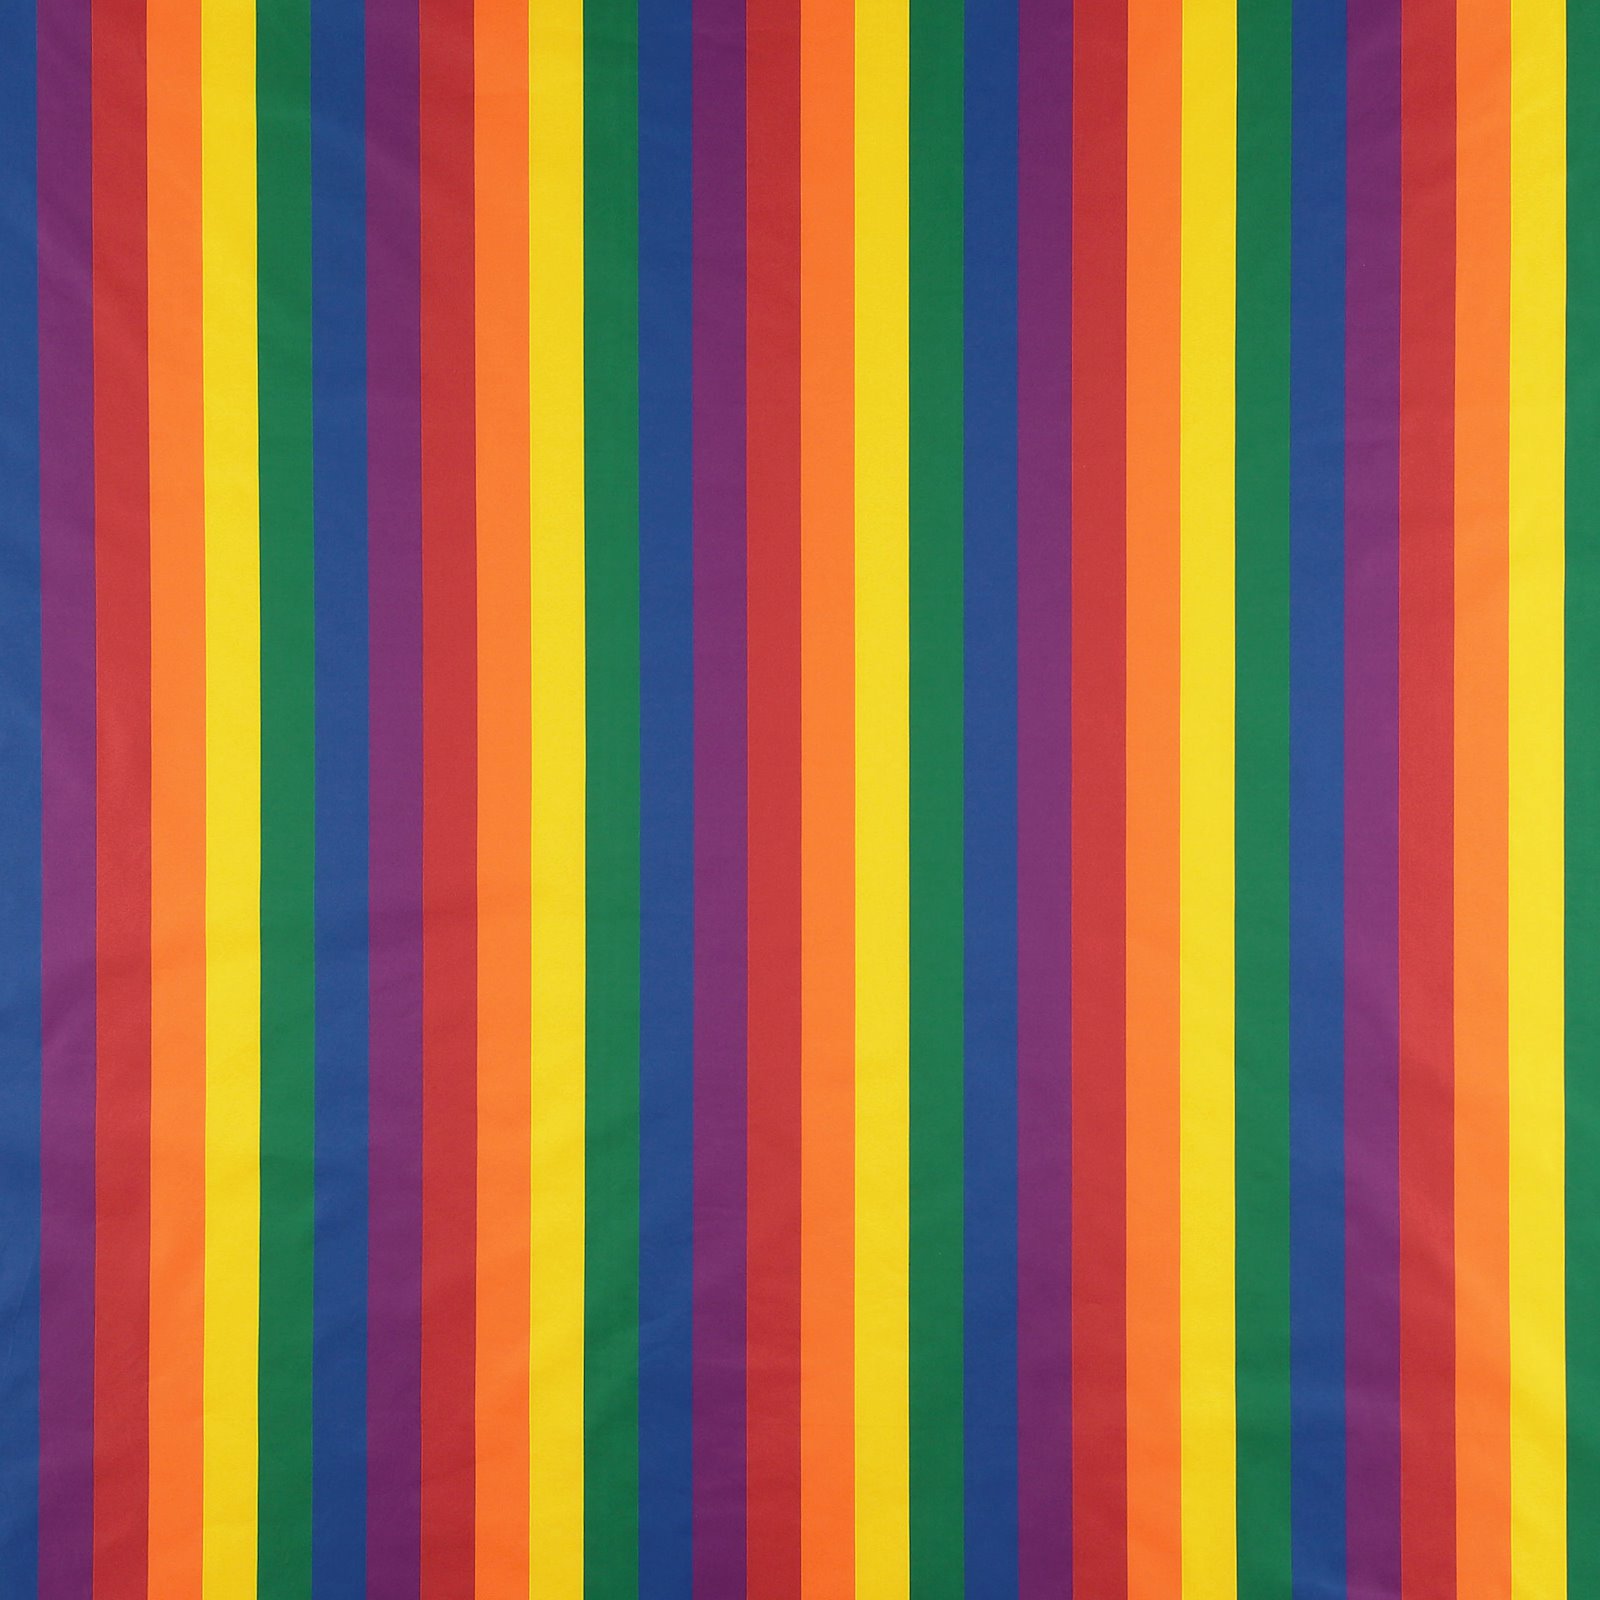 Vevet regntøysstoff med regnbue striper 650751_pack_lp.jpg